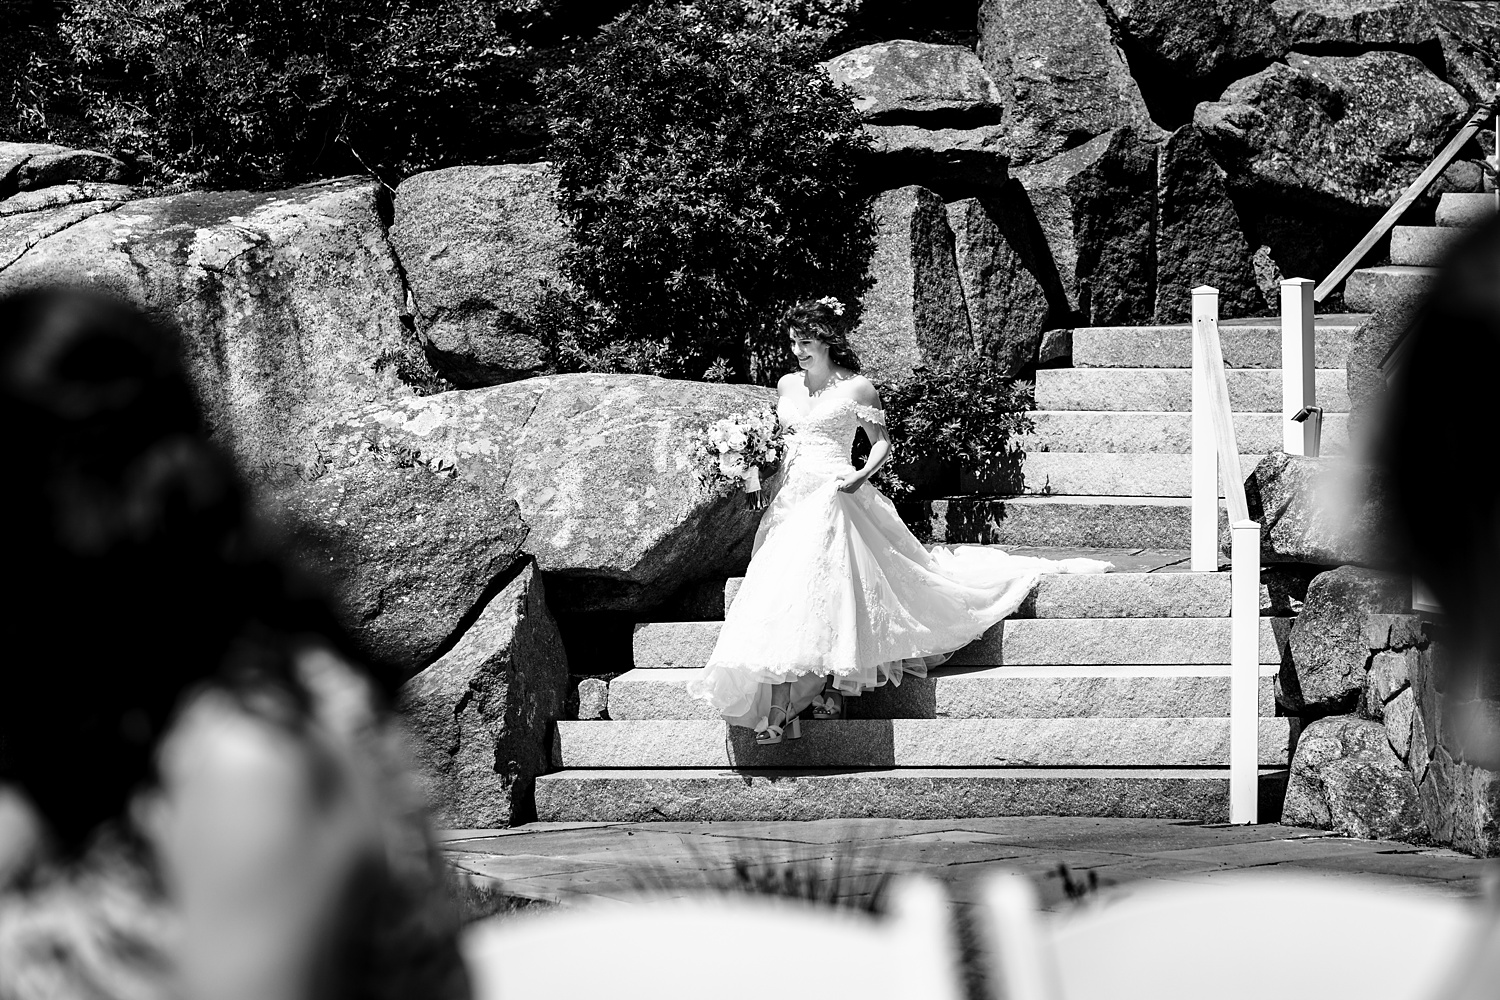 The bride enters the wedding ceremony